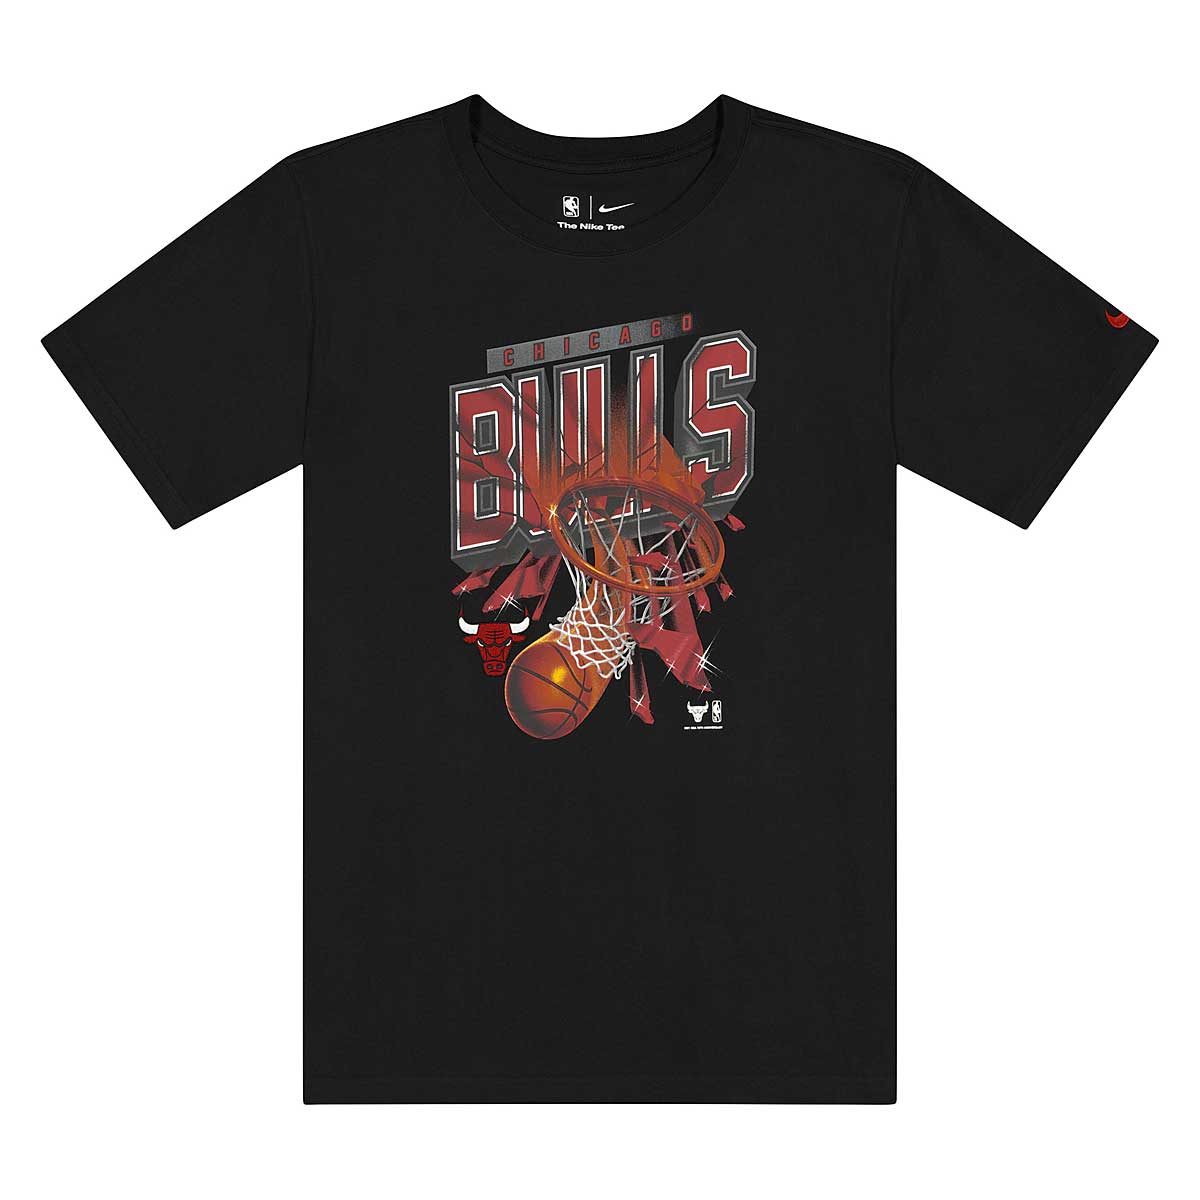 Buy NBA CHICAGO BULLS COURTSIDE SHATTERED T-SHIRT for N/A 0.0 on KICKZ.com!